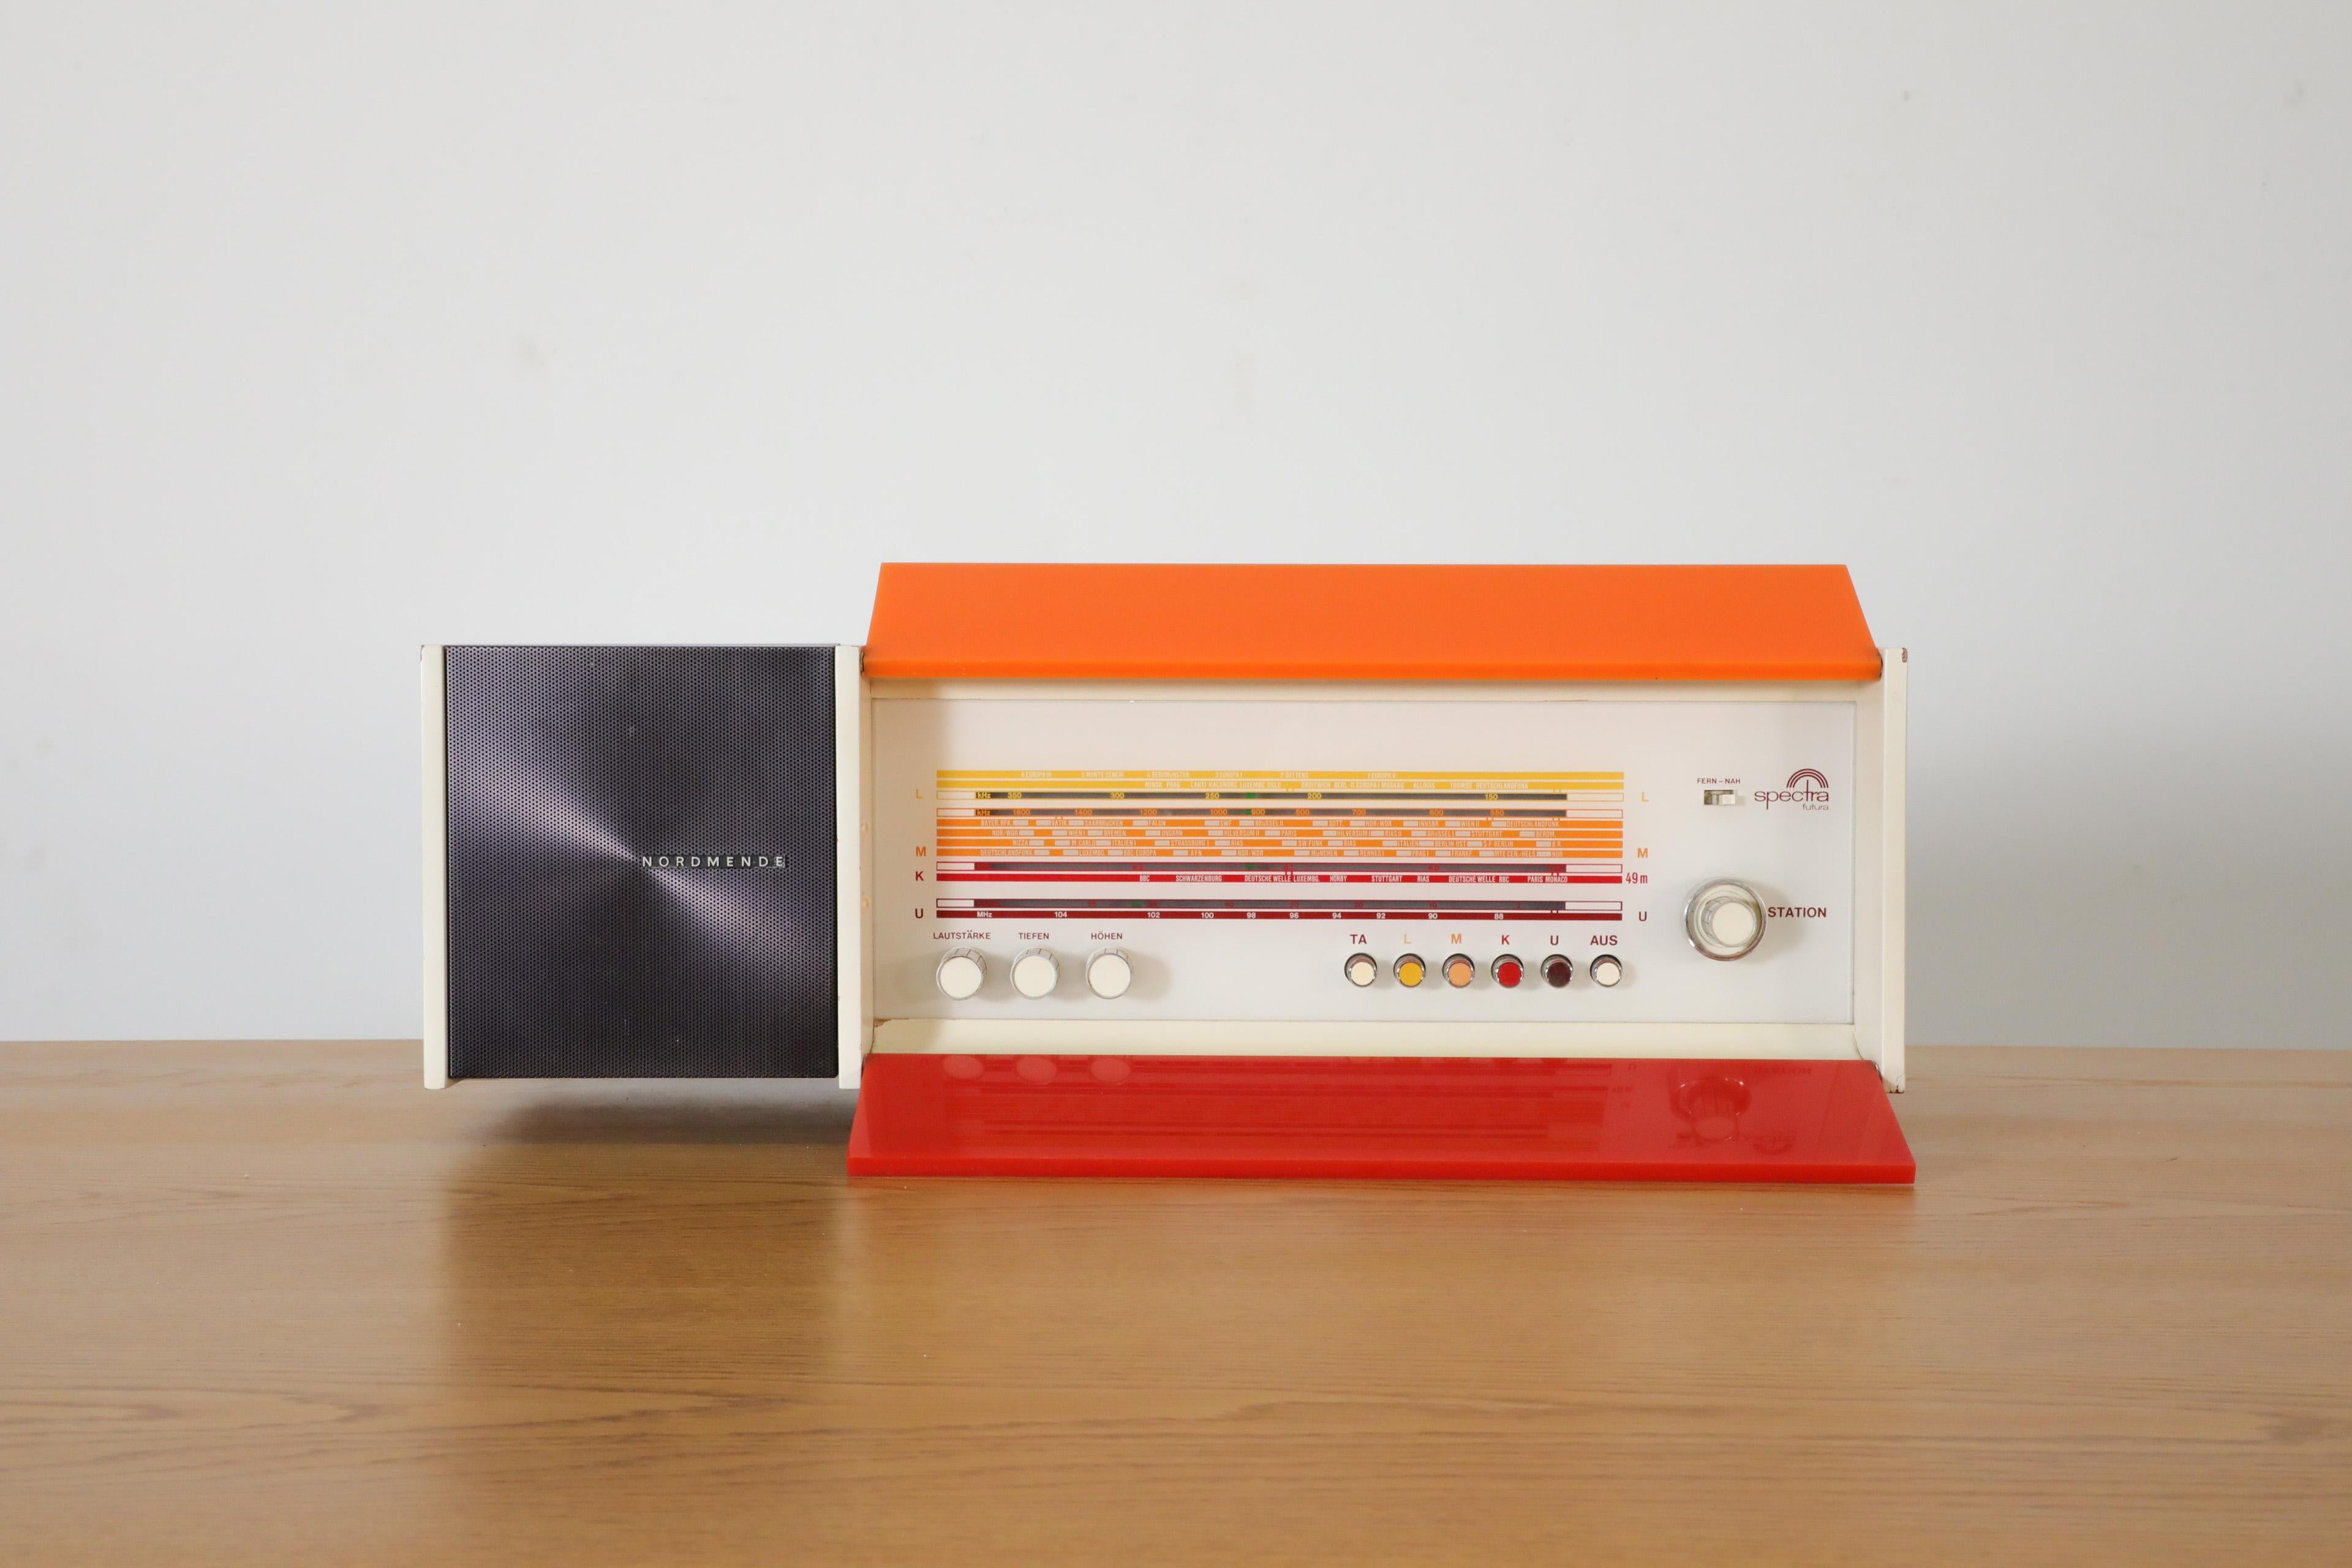 Métal Radio à transistors Spectra Futura de Raymond Loewy Design/One en rouge et orange en vente